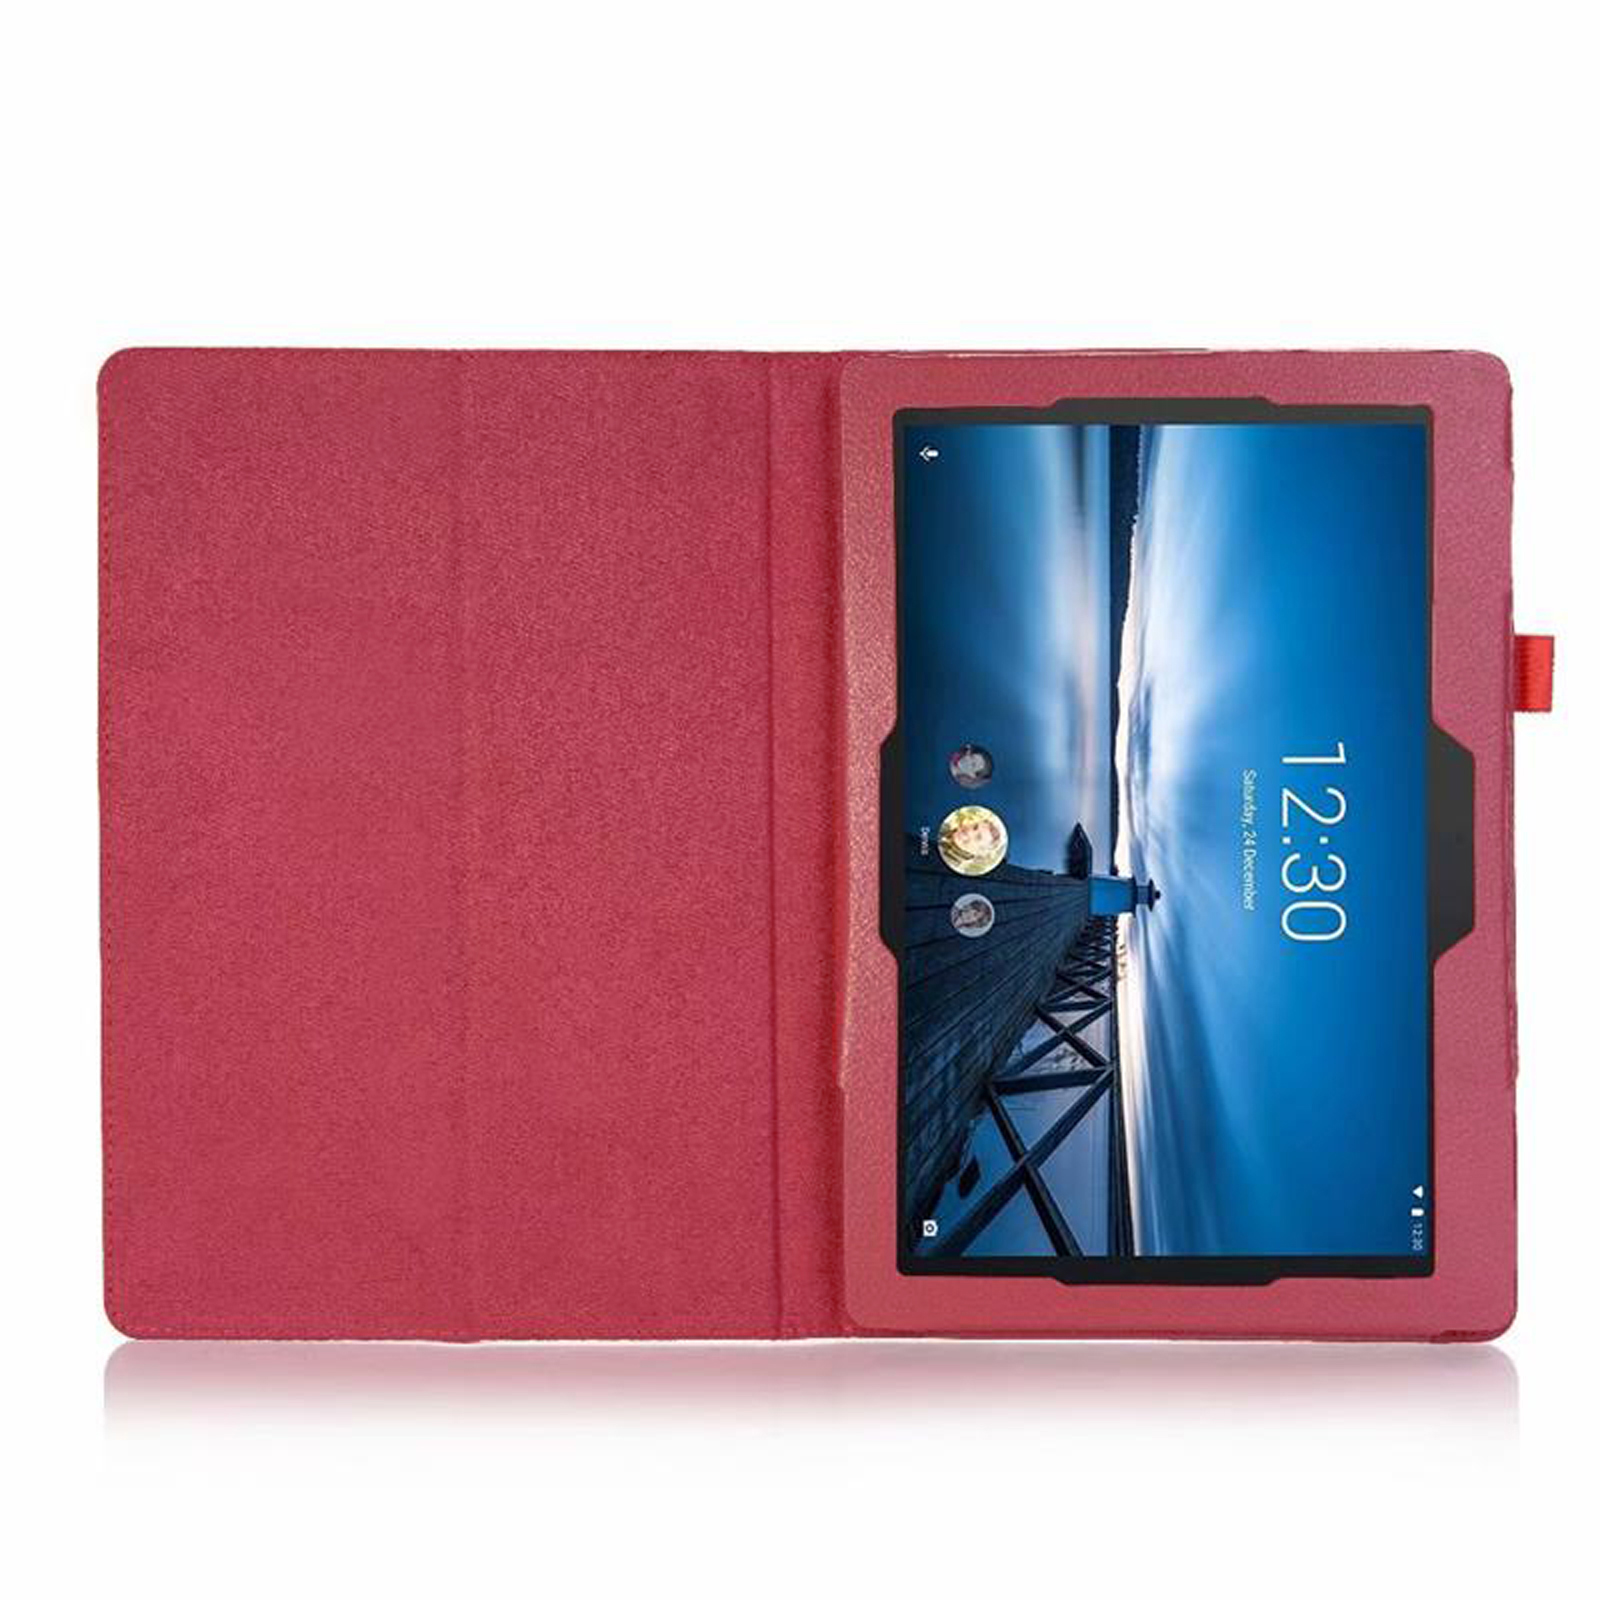 LOBWERK Hülle Schutzhülle TB-X605F/TB-X705F M10/P10 10.1 Lenovo Tab (2018) Bookcover Rot für Zoll Kunstleder